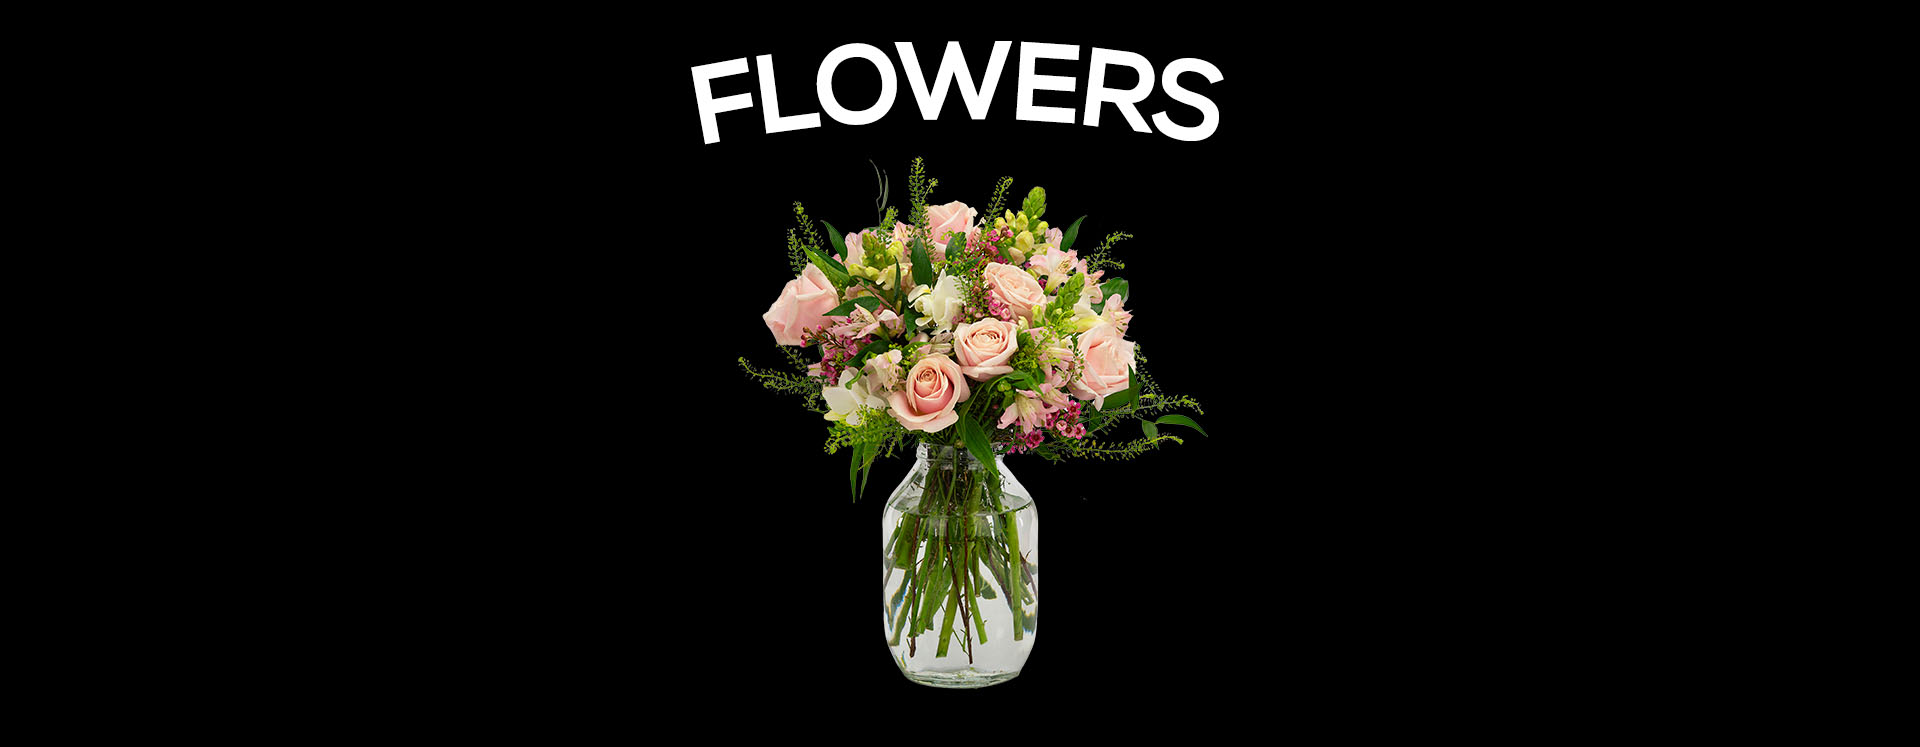 Send a bouquet of fresh flowers